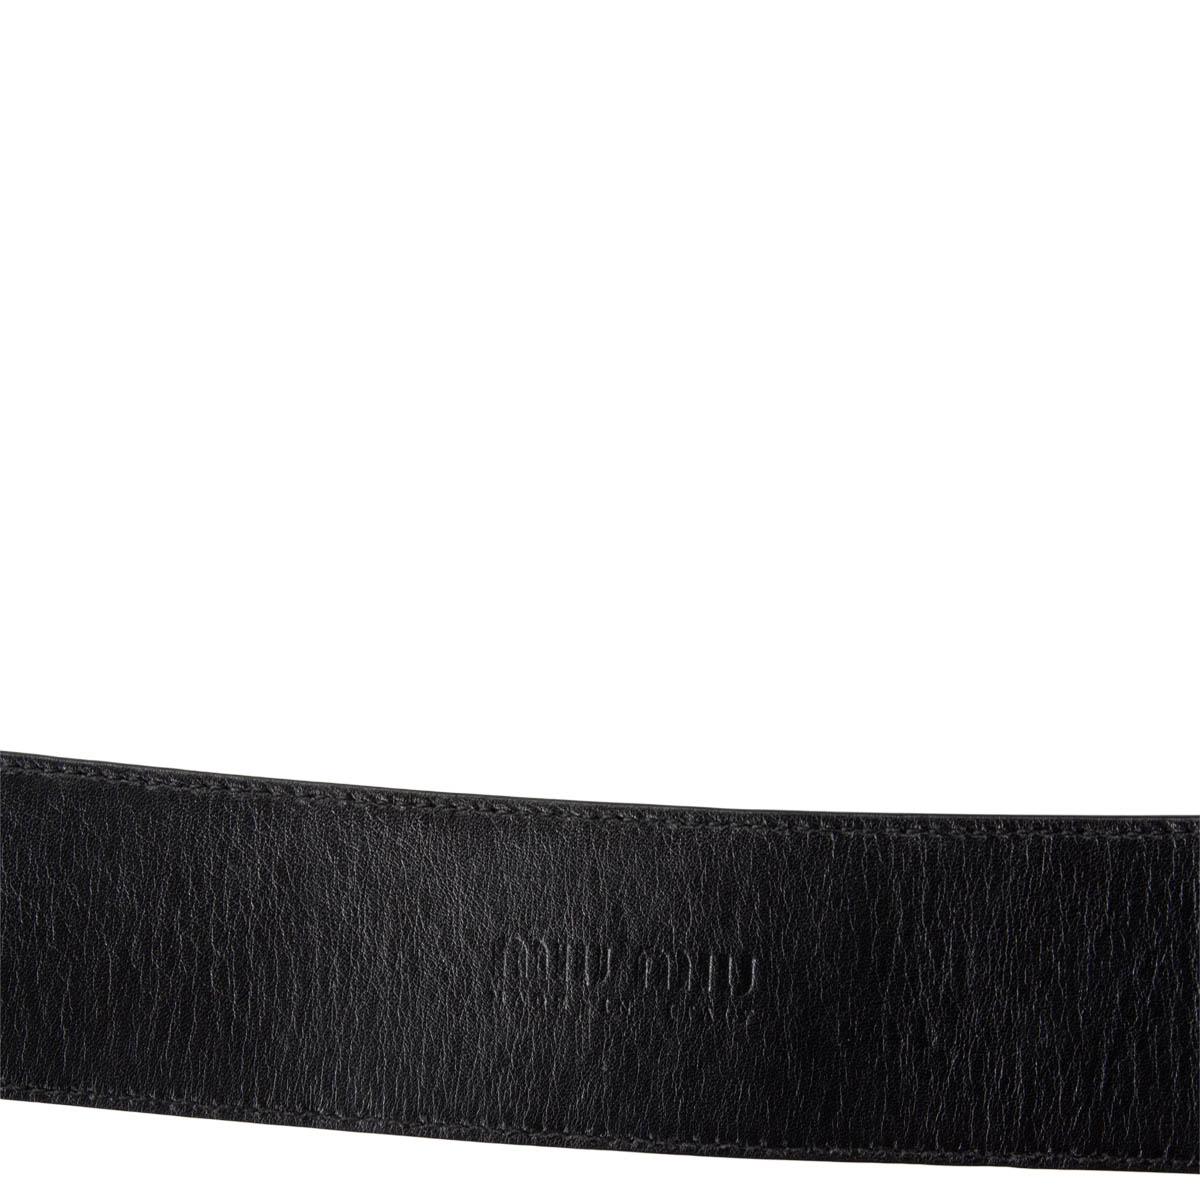 MIU MIU black patent leather WIDE WAIST Belt 70 1